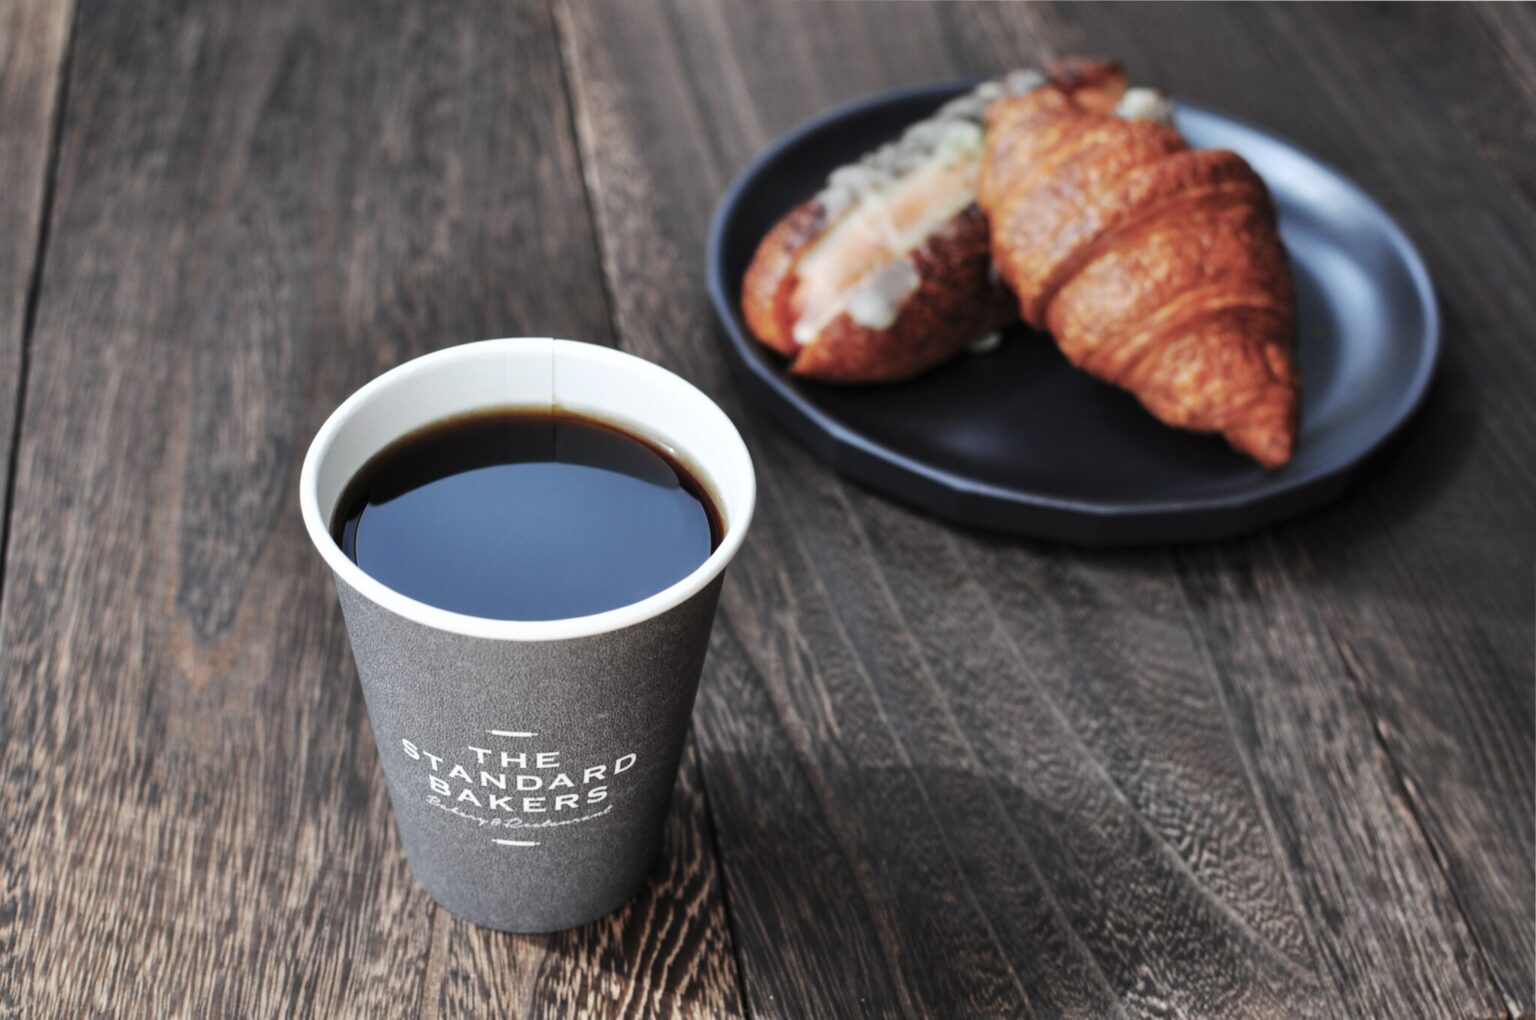 〈THE STANDARD BAKERS TOKYO〉は1日1回、コーヒーSサイズが1杯受け取れる。（月4,400円）